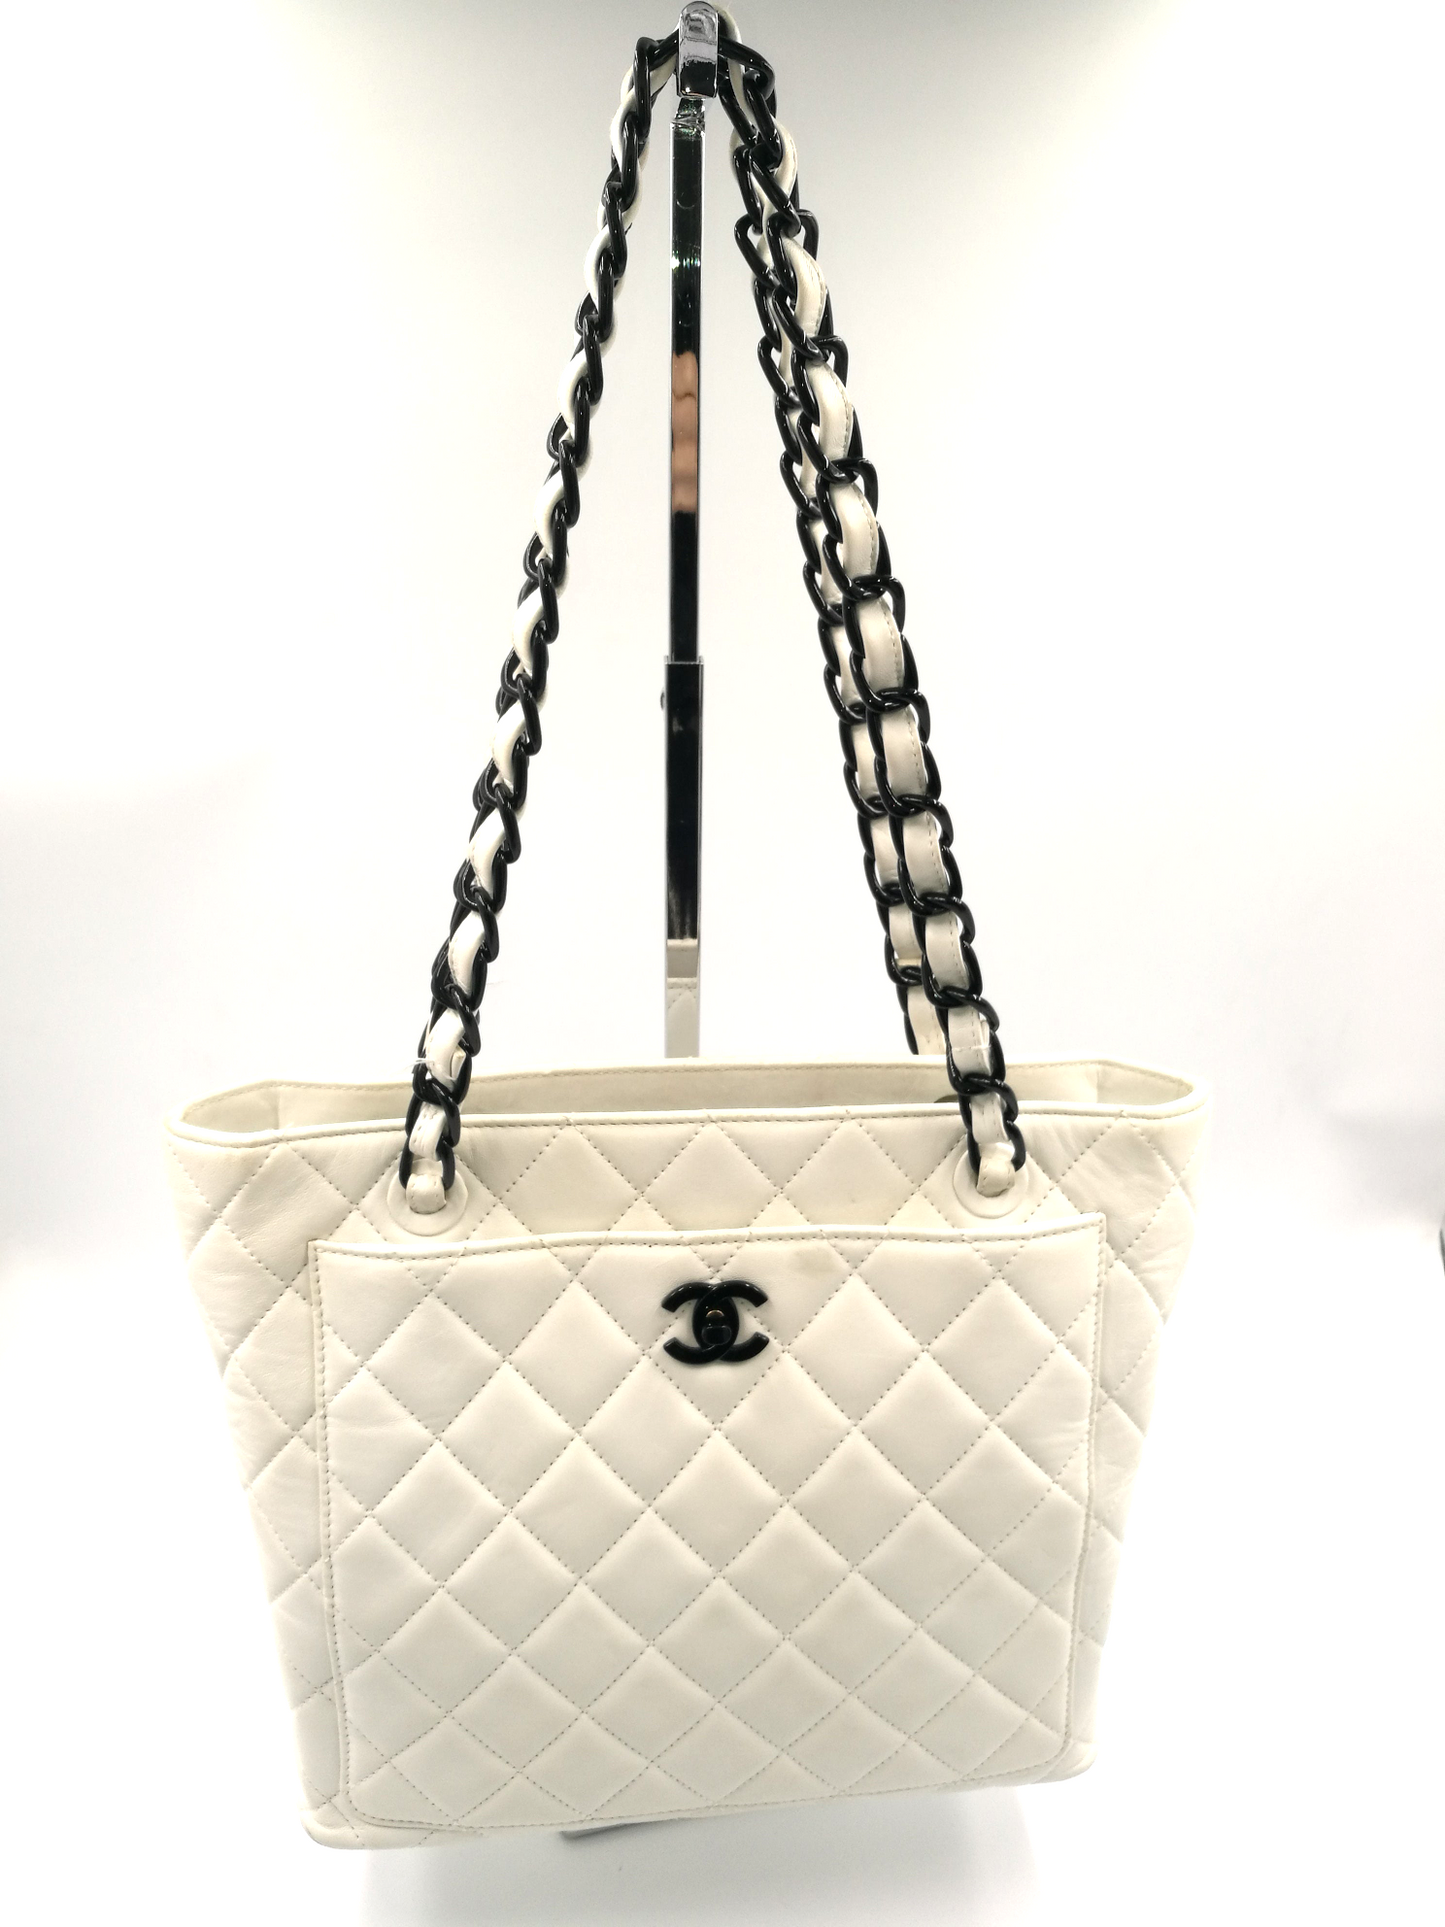 Chanel Tote white bag